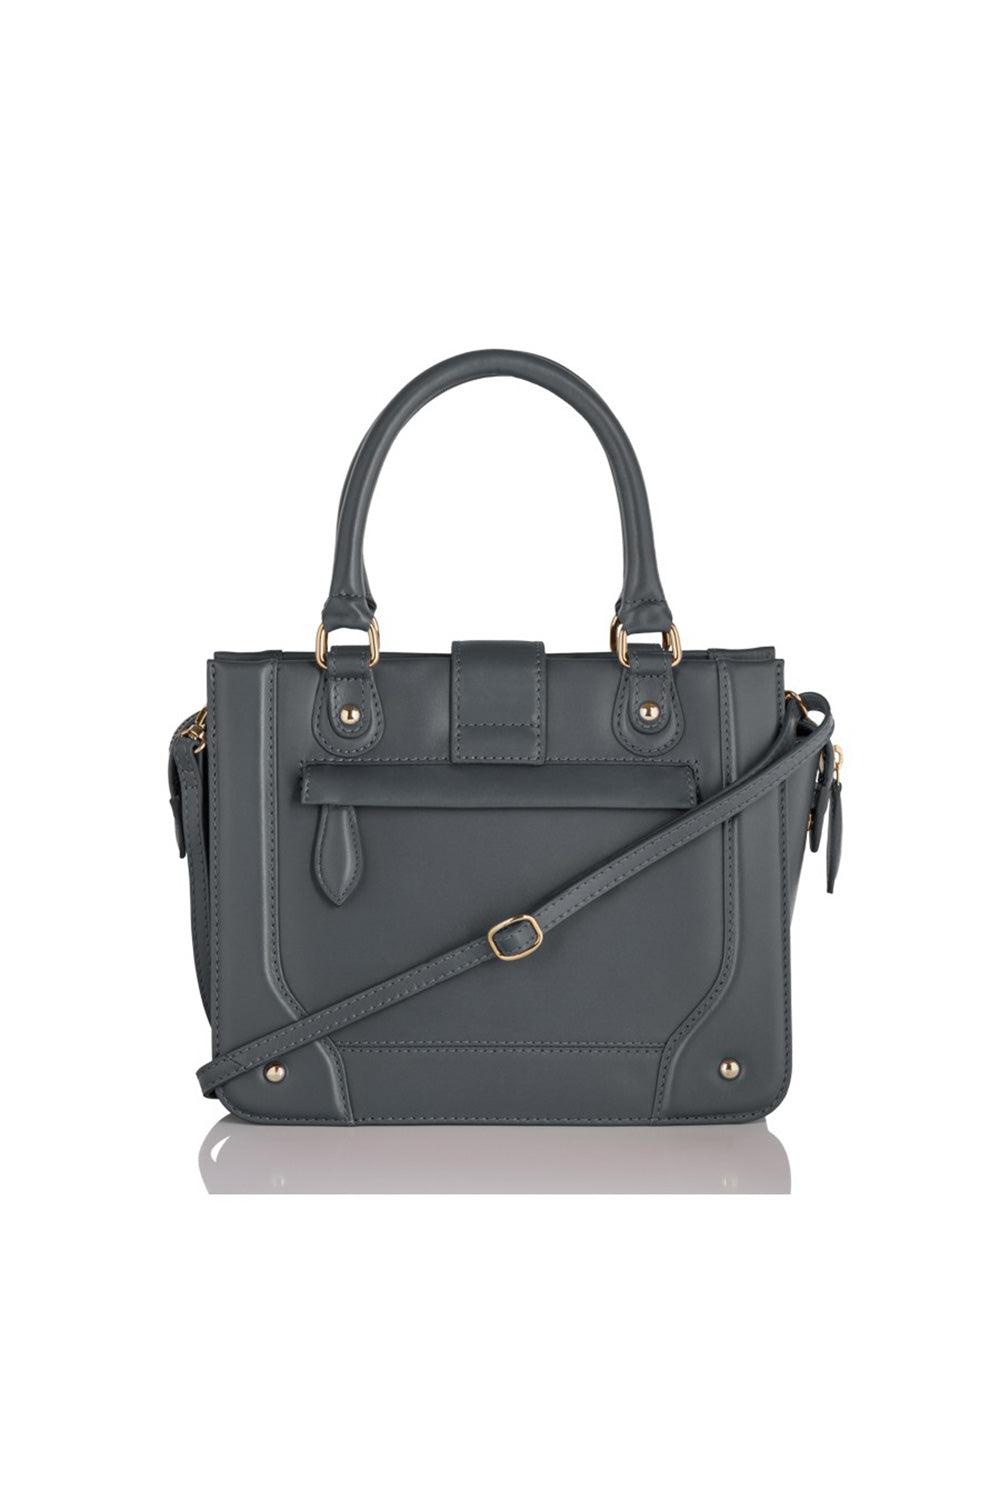 Natural leather bag model 173187 Elsy Style Casual Handbags, Shoulder Bags